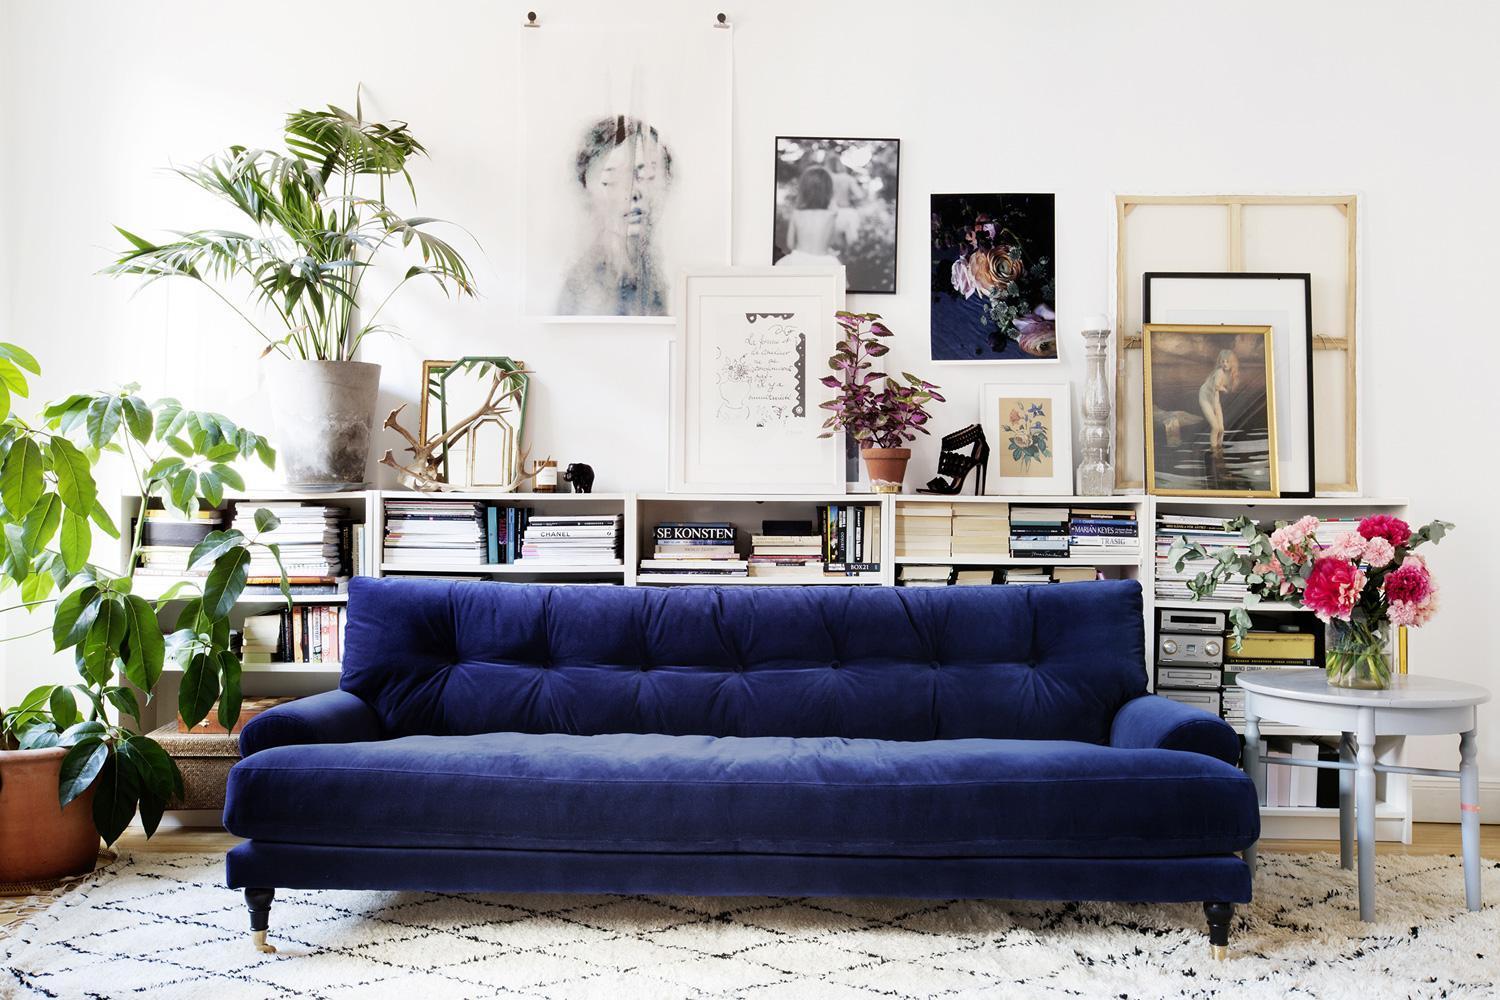 Interior Design Trends 2019 - Greenery Plants Living Room